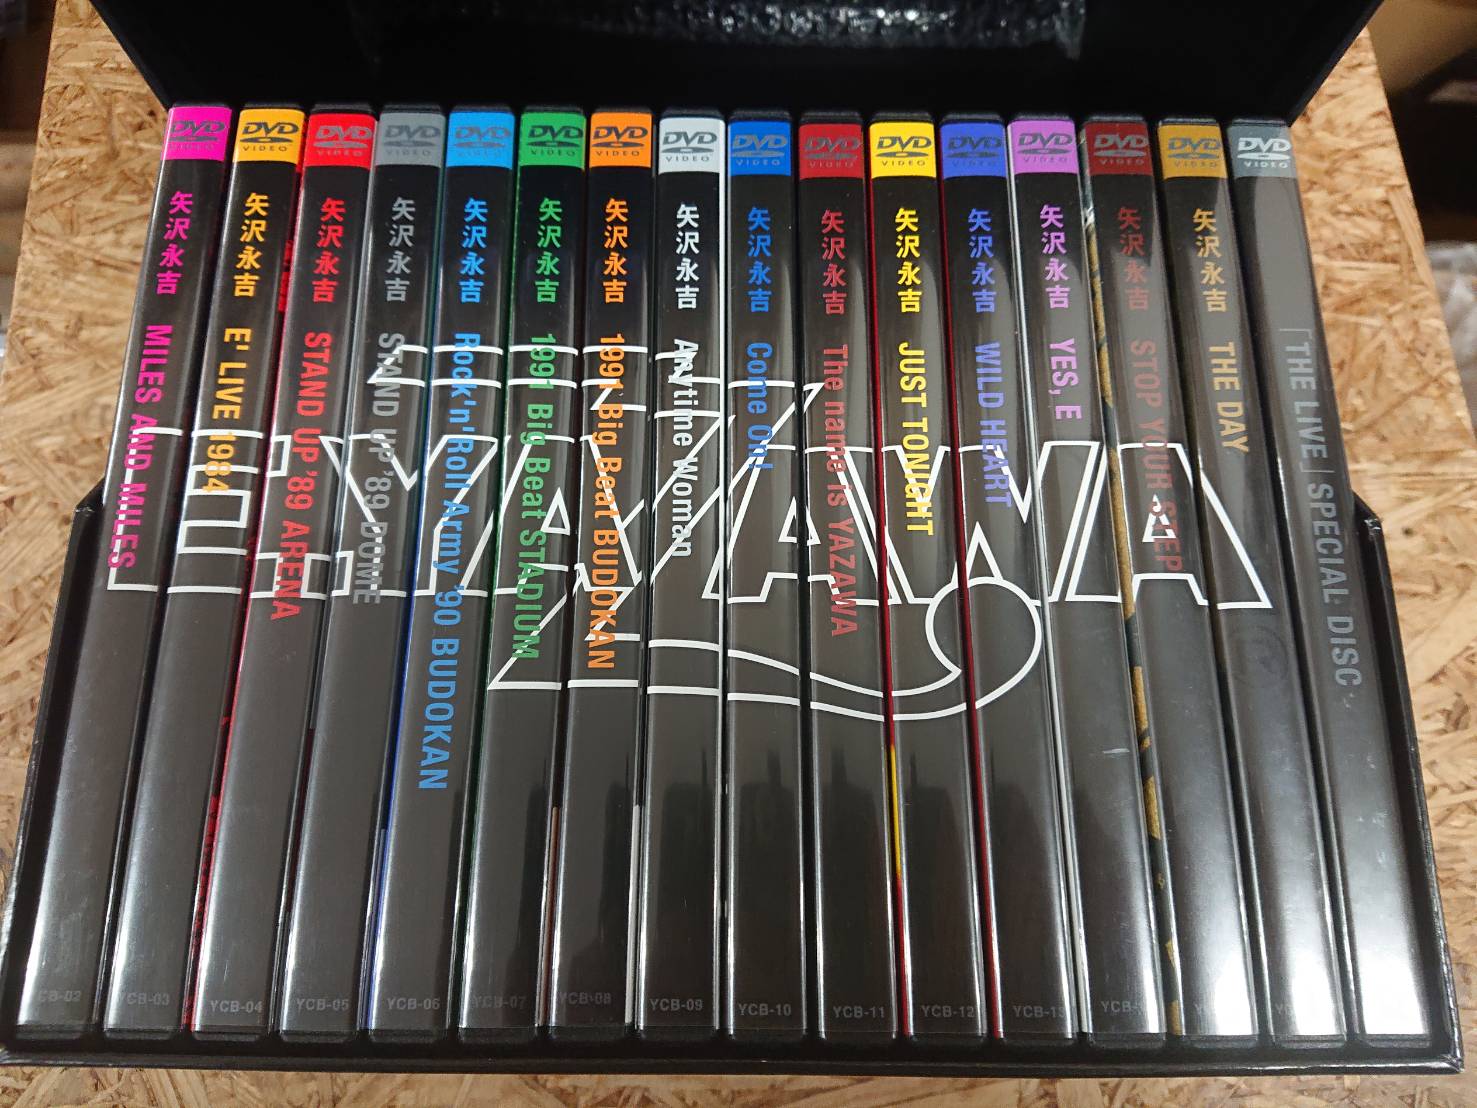 DVD】《矢沢永吉 THE LIVE EIKICHI YAZAWA DVD BOX》入荷しました 